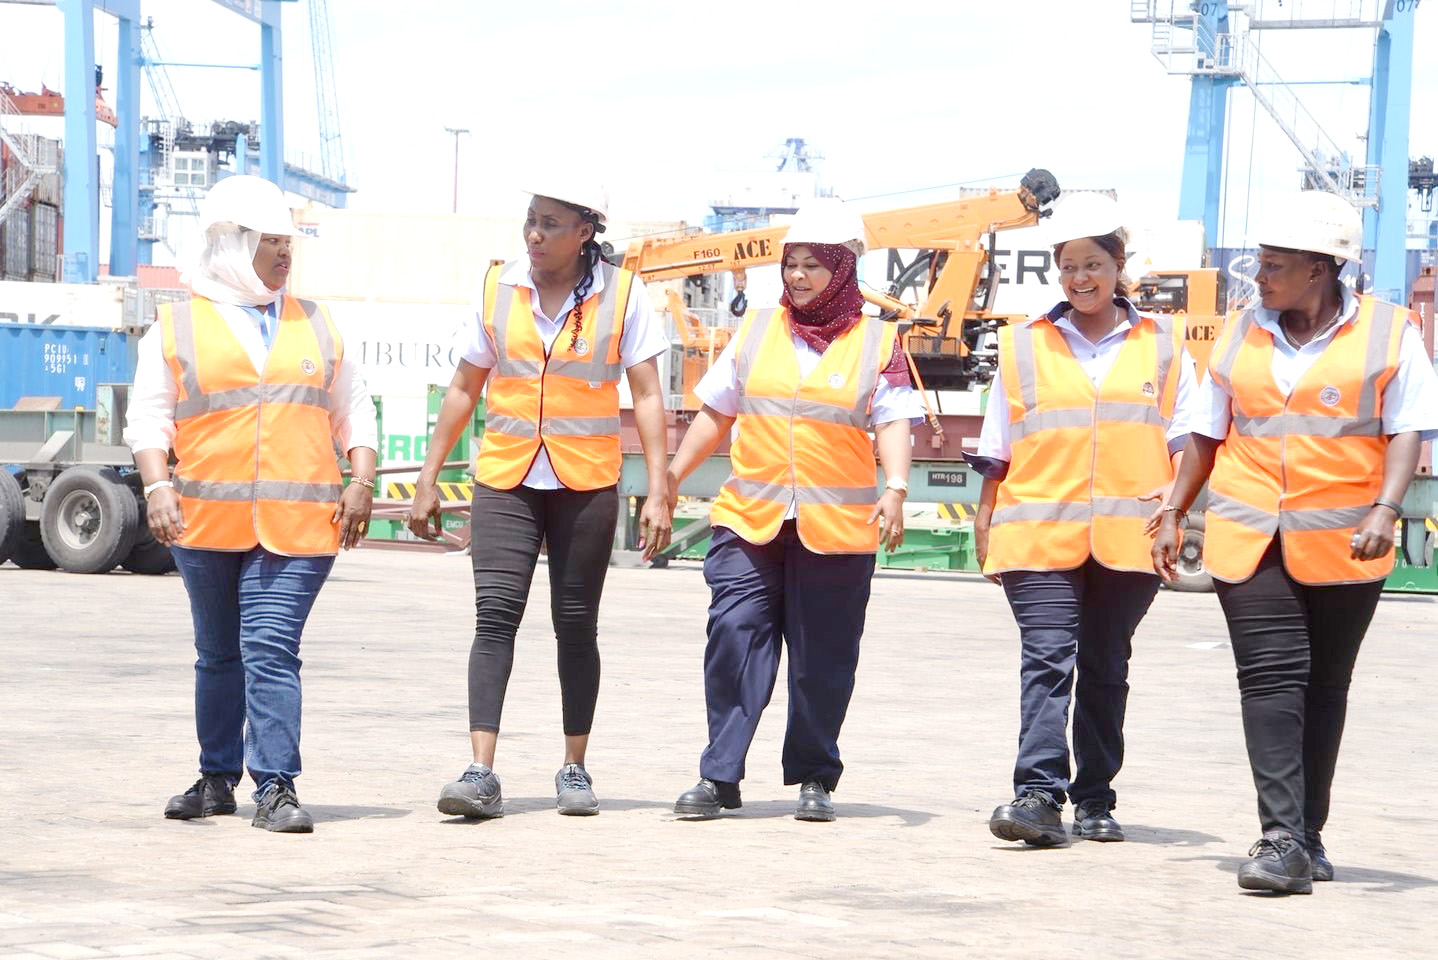 Women breaking barriers in male-dominated maritime jobs